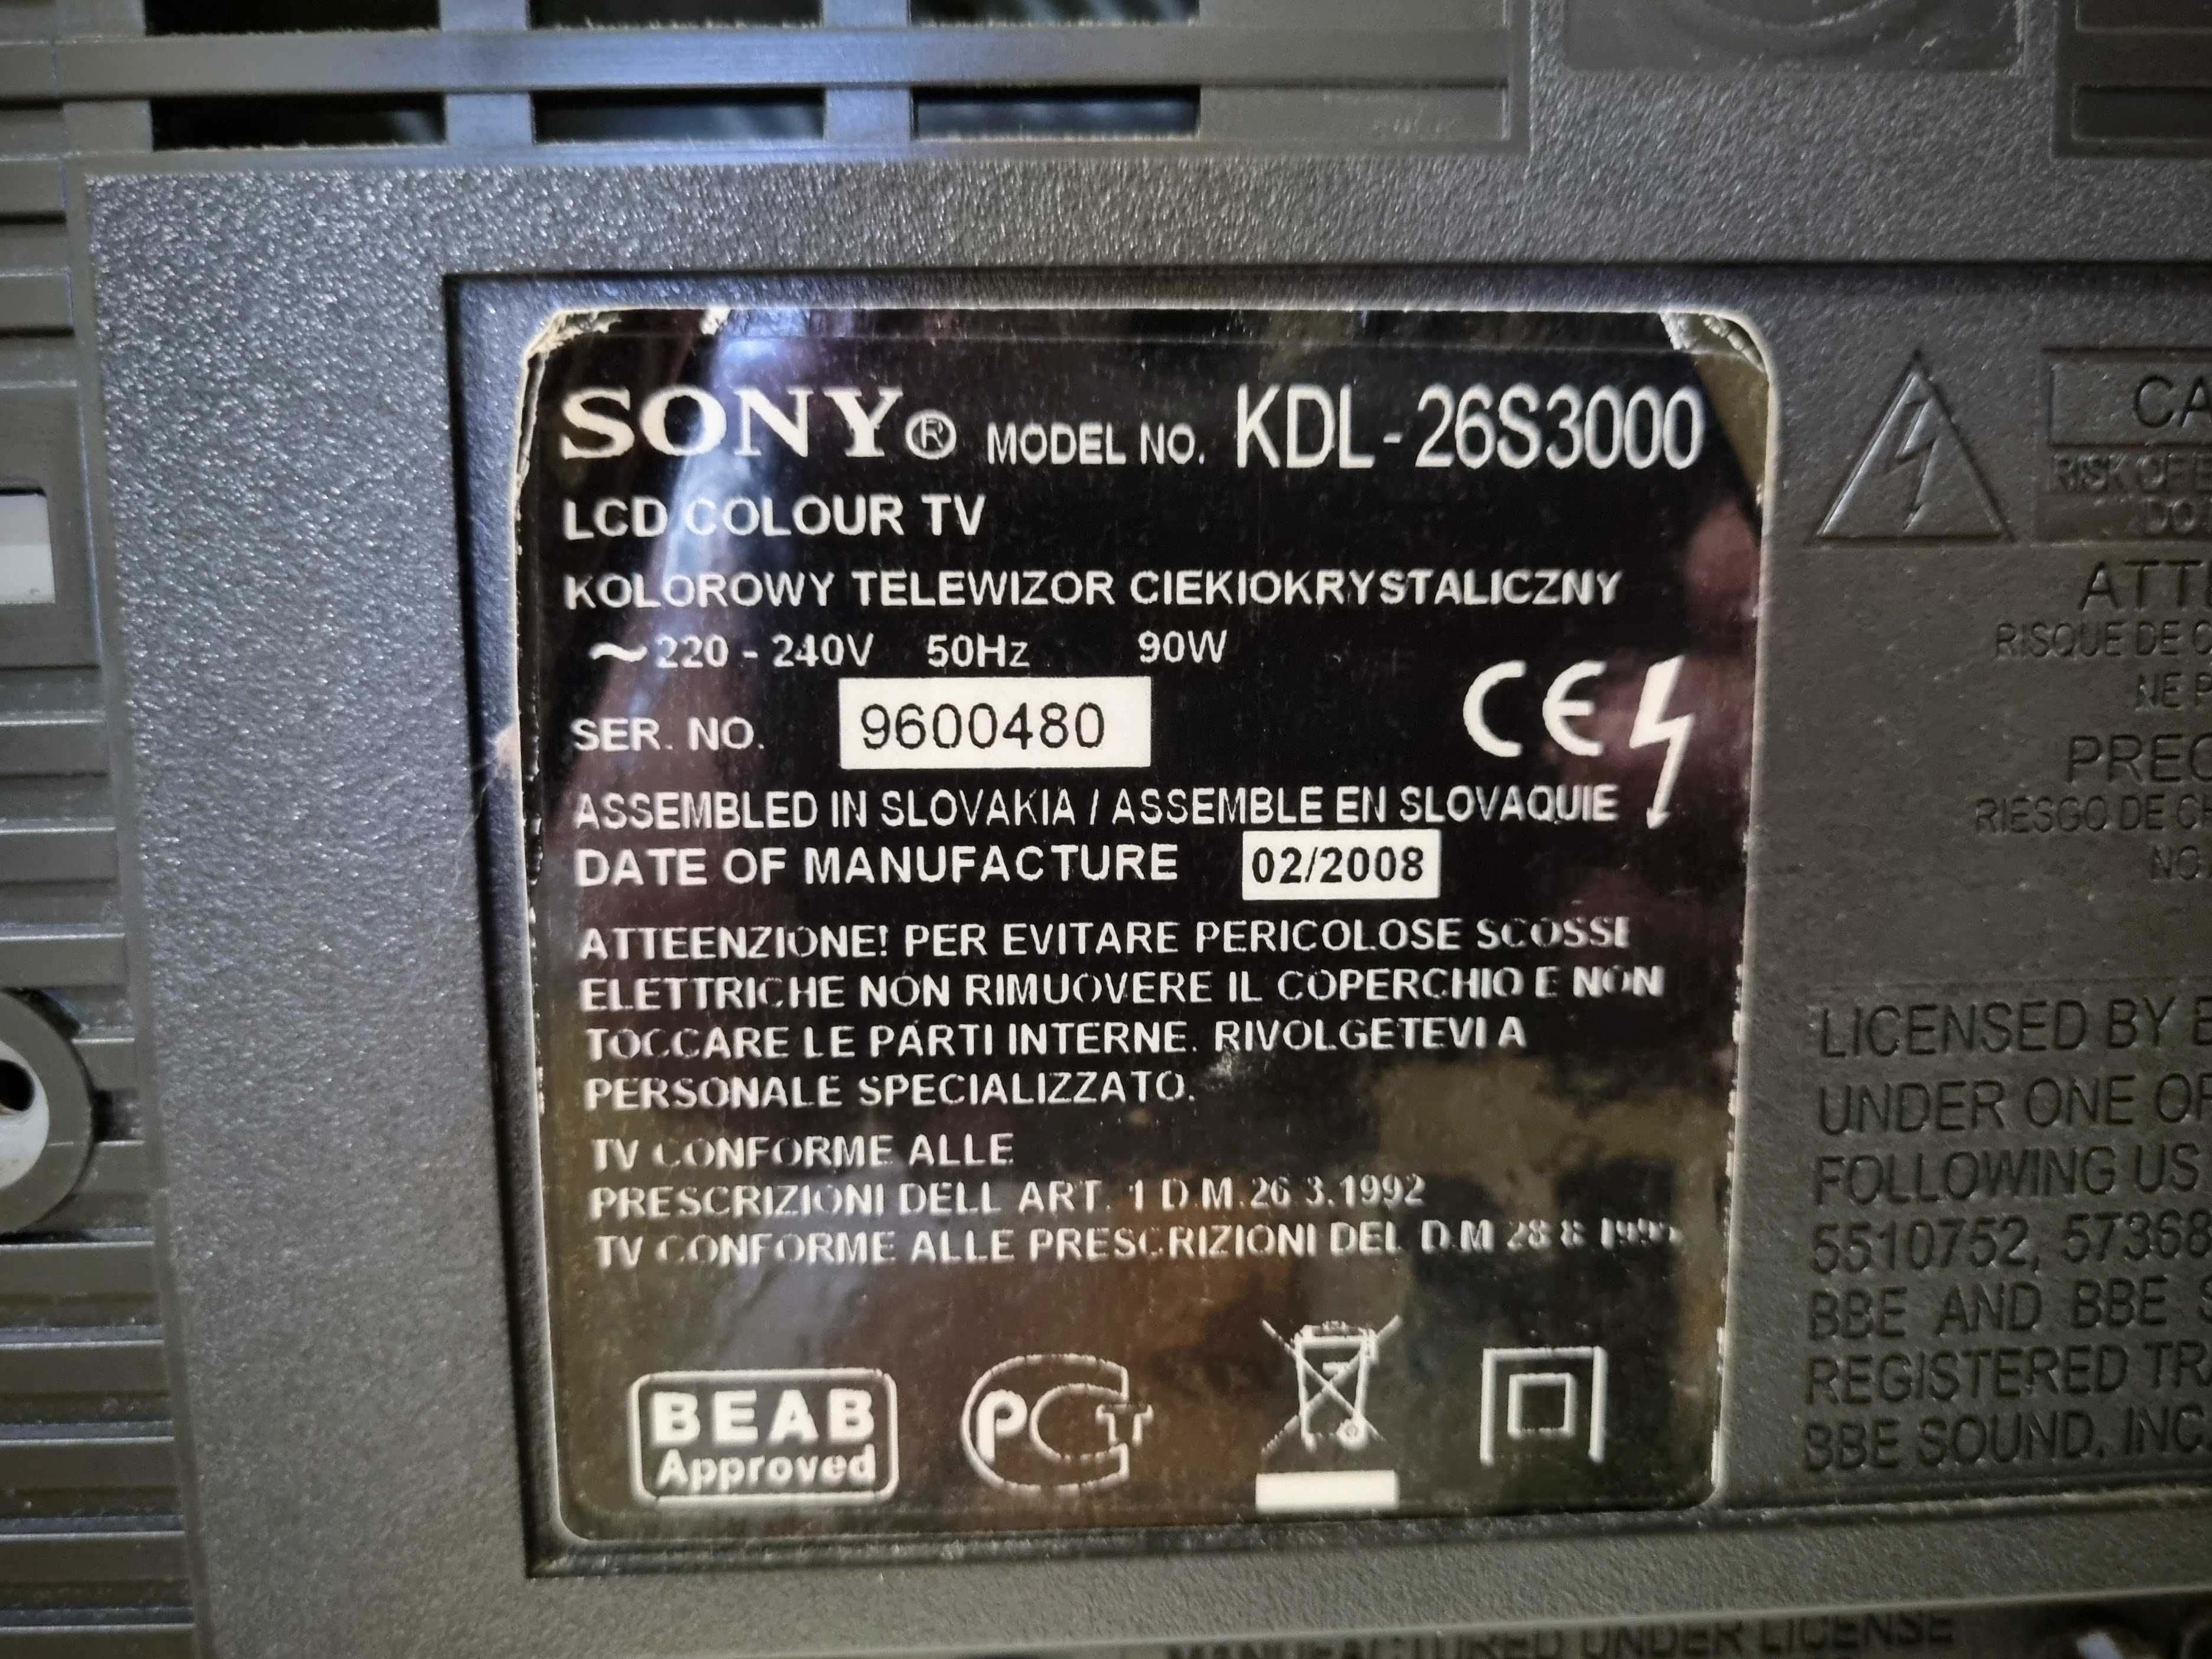 Telewizor SONY KDL-26S3000 LCD - sprawny i zadbany